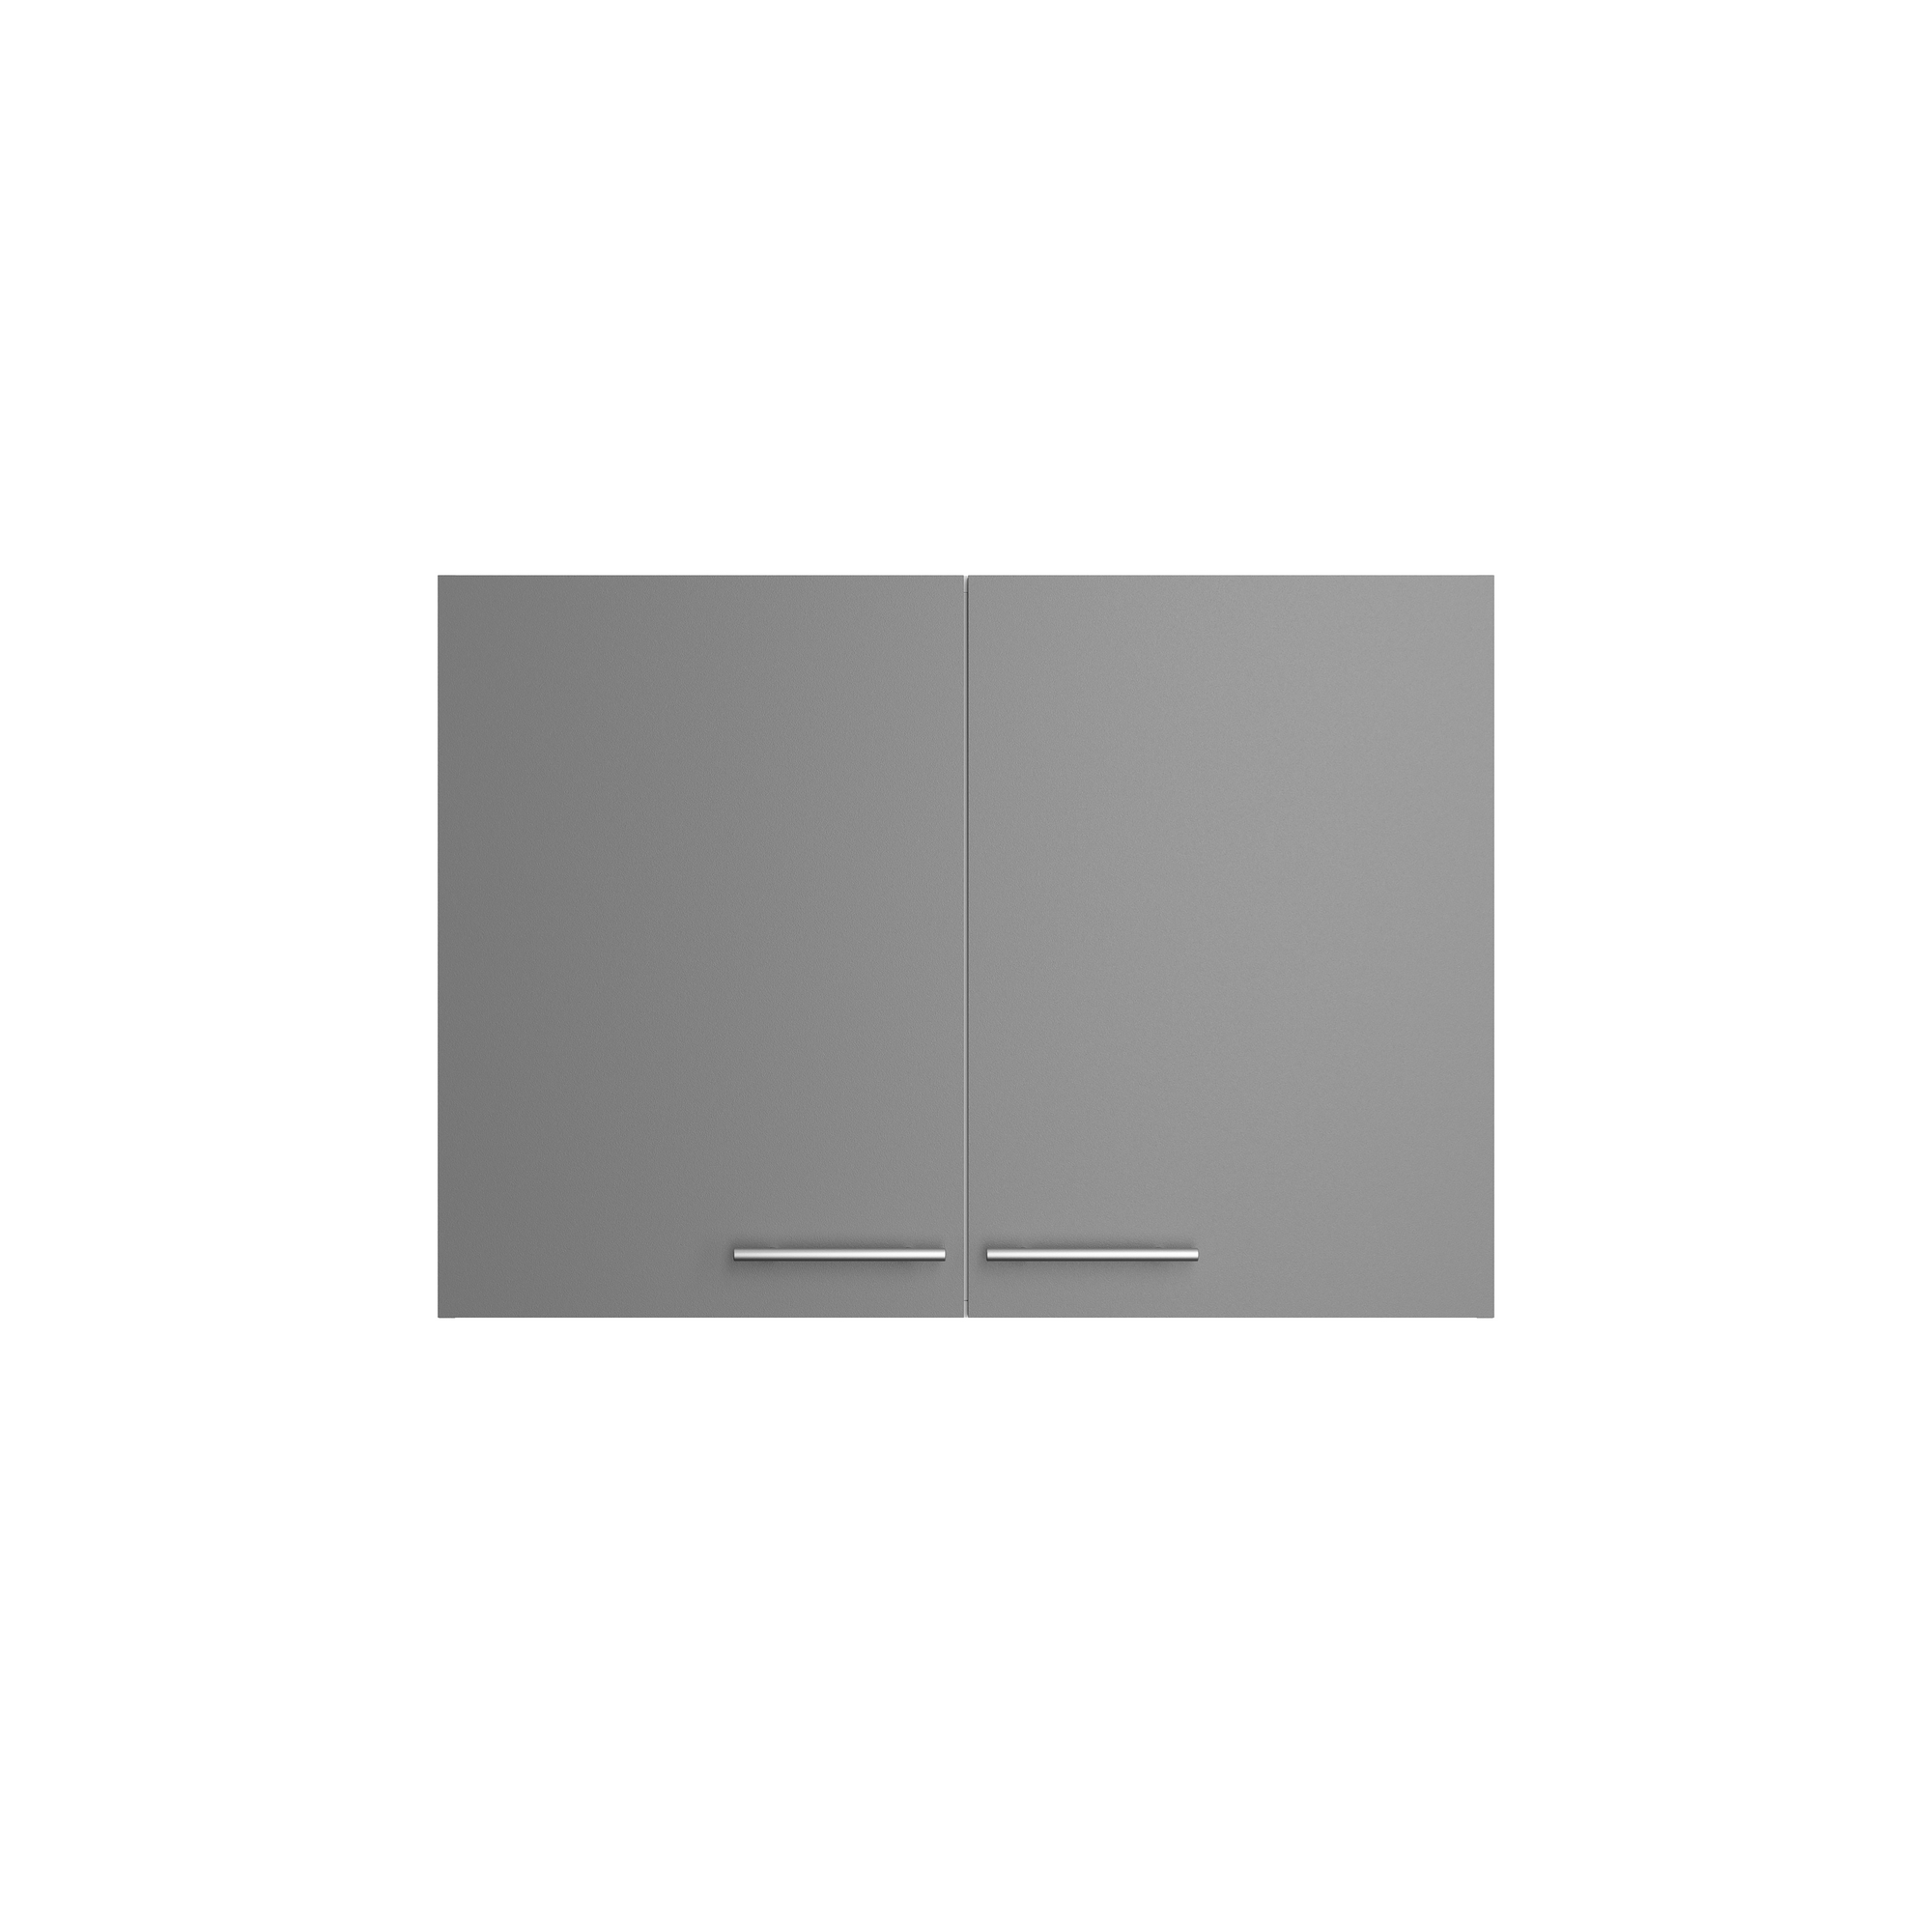 Oberschrank 'Optikomfort Mats825' grau 100 x 70,4 x 34,9 cm + product picture